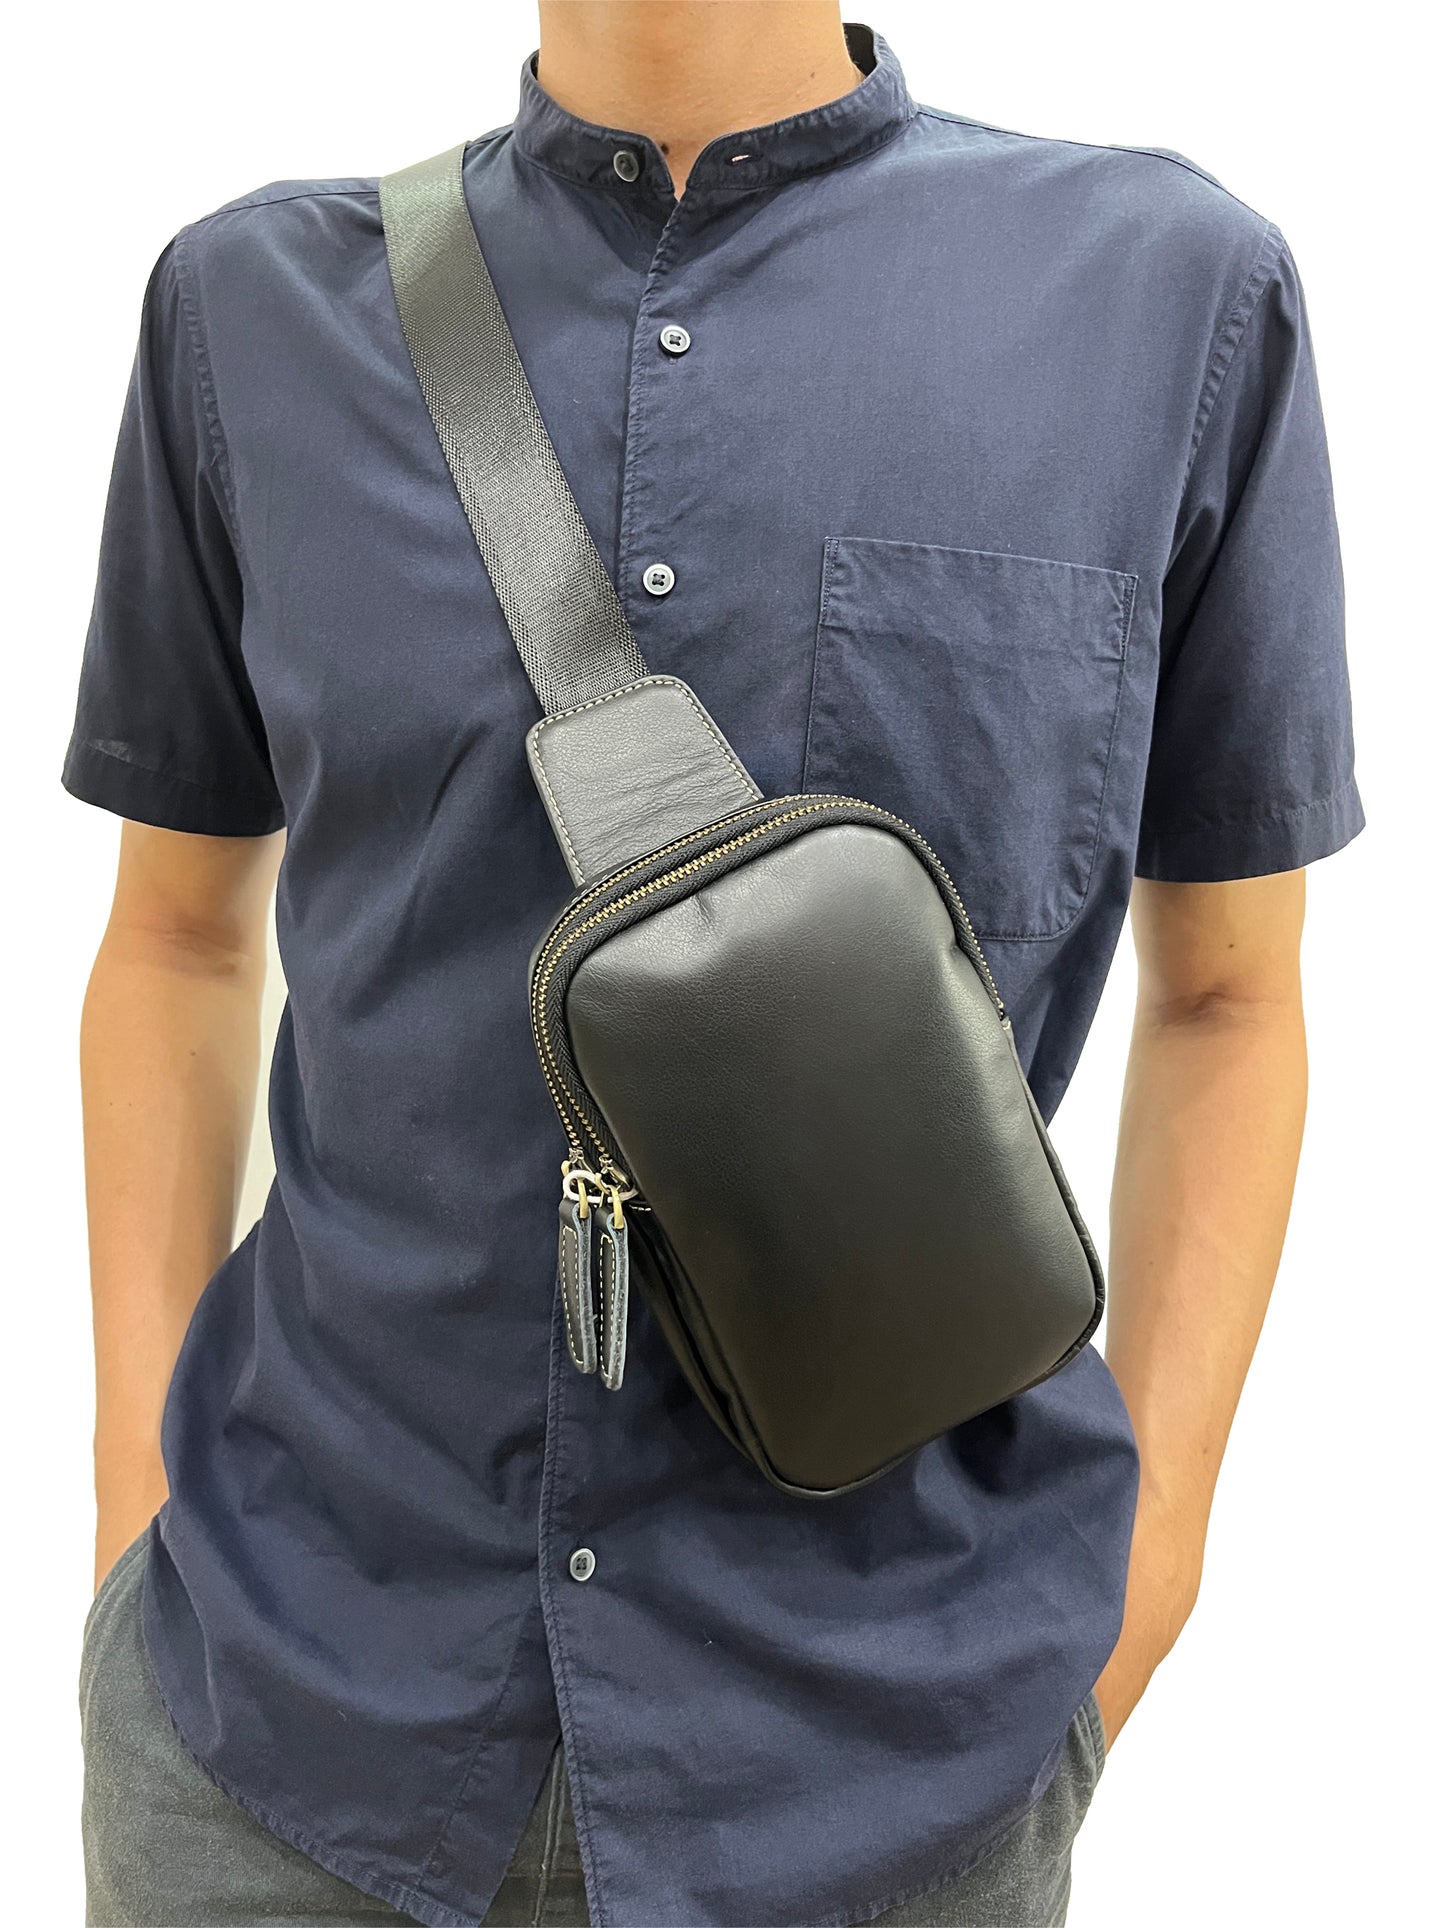 Unisex genuine cowhide leather fanny pack waist bag Davel design